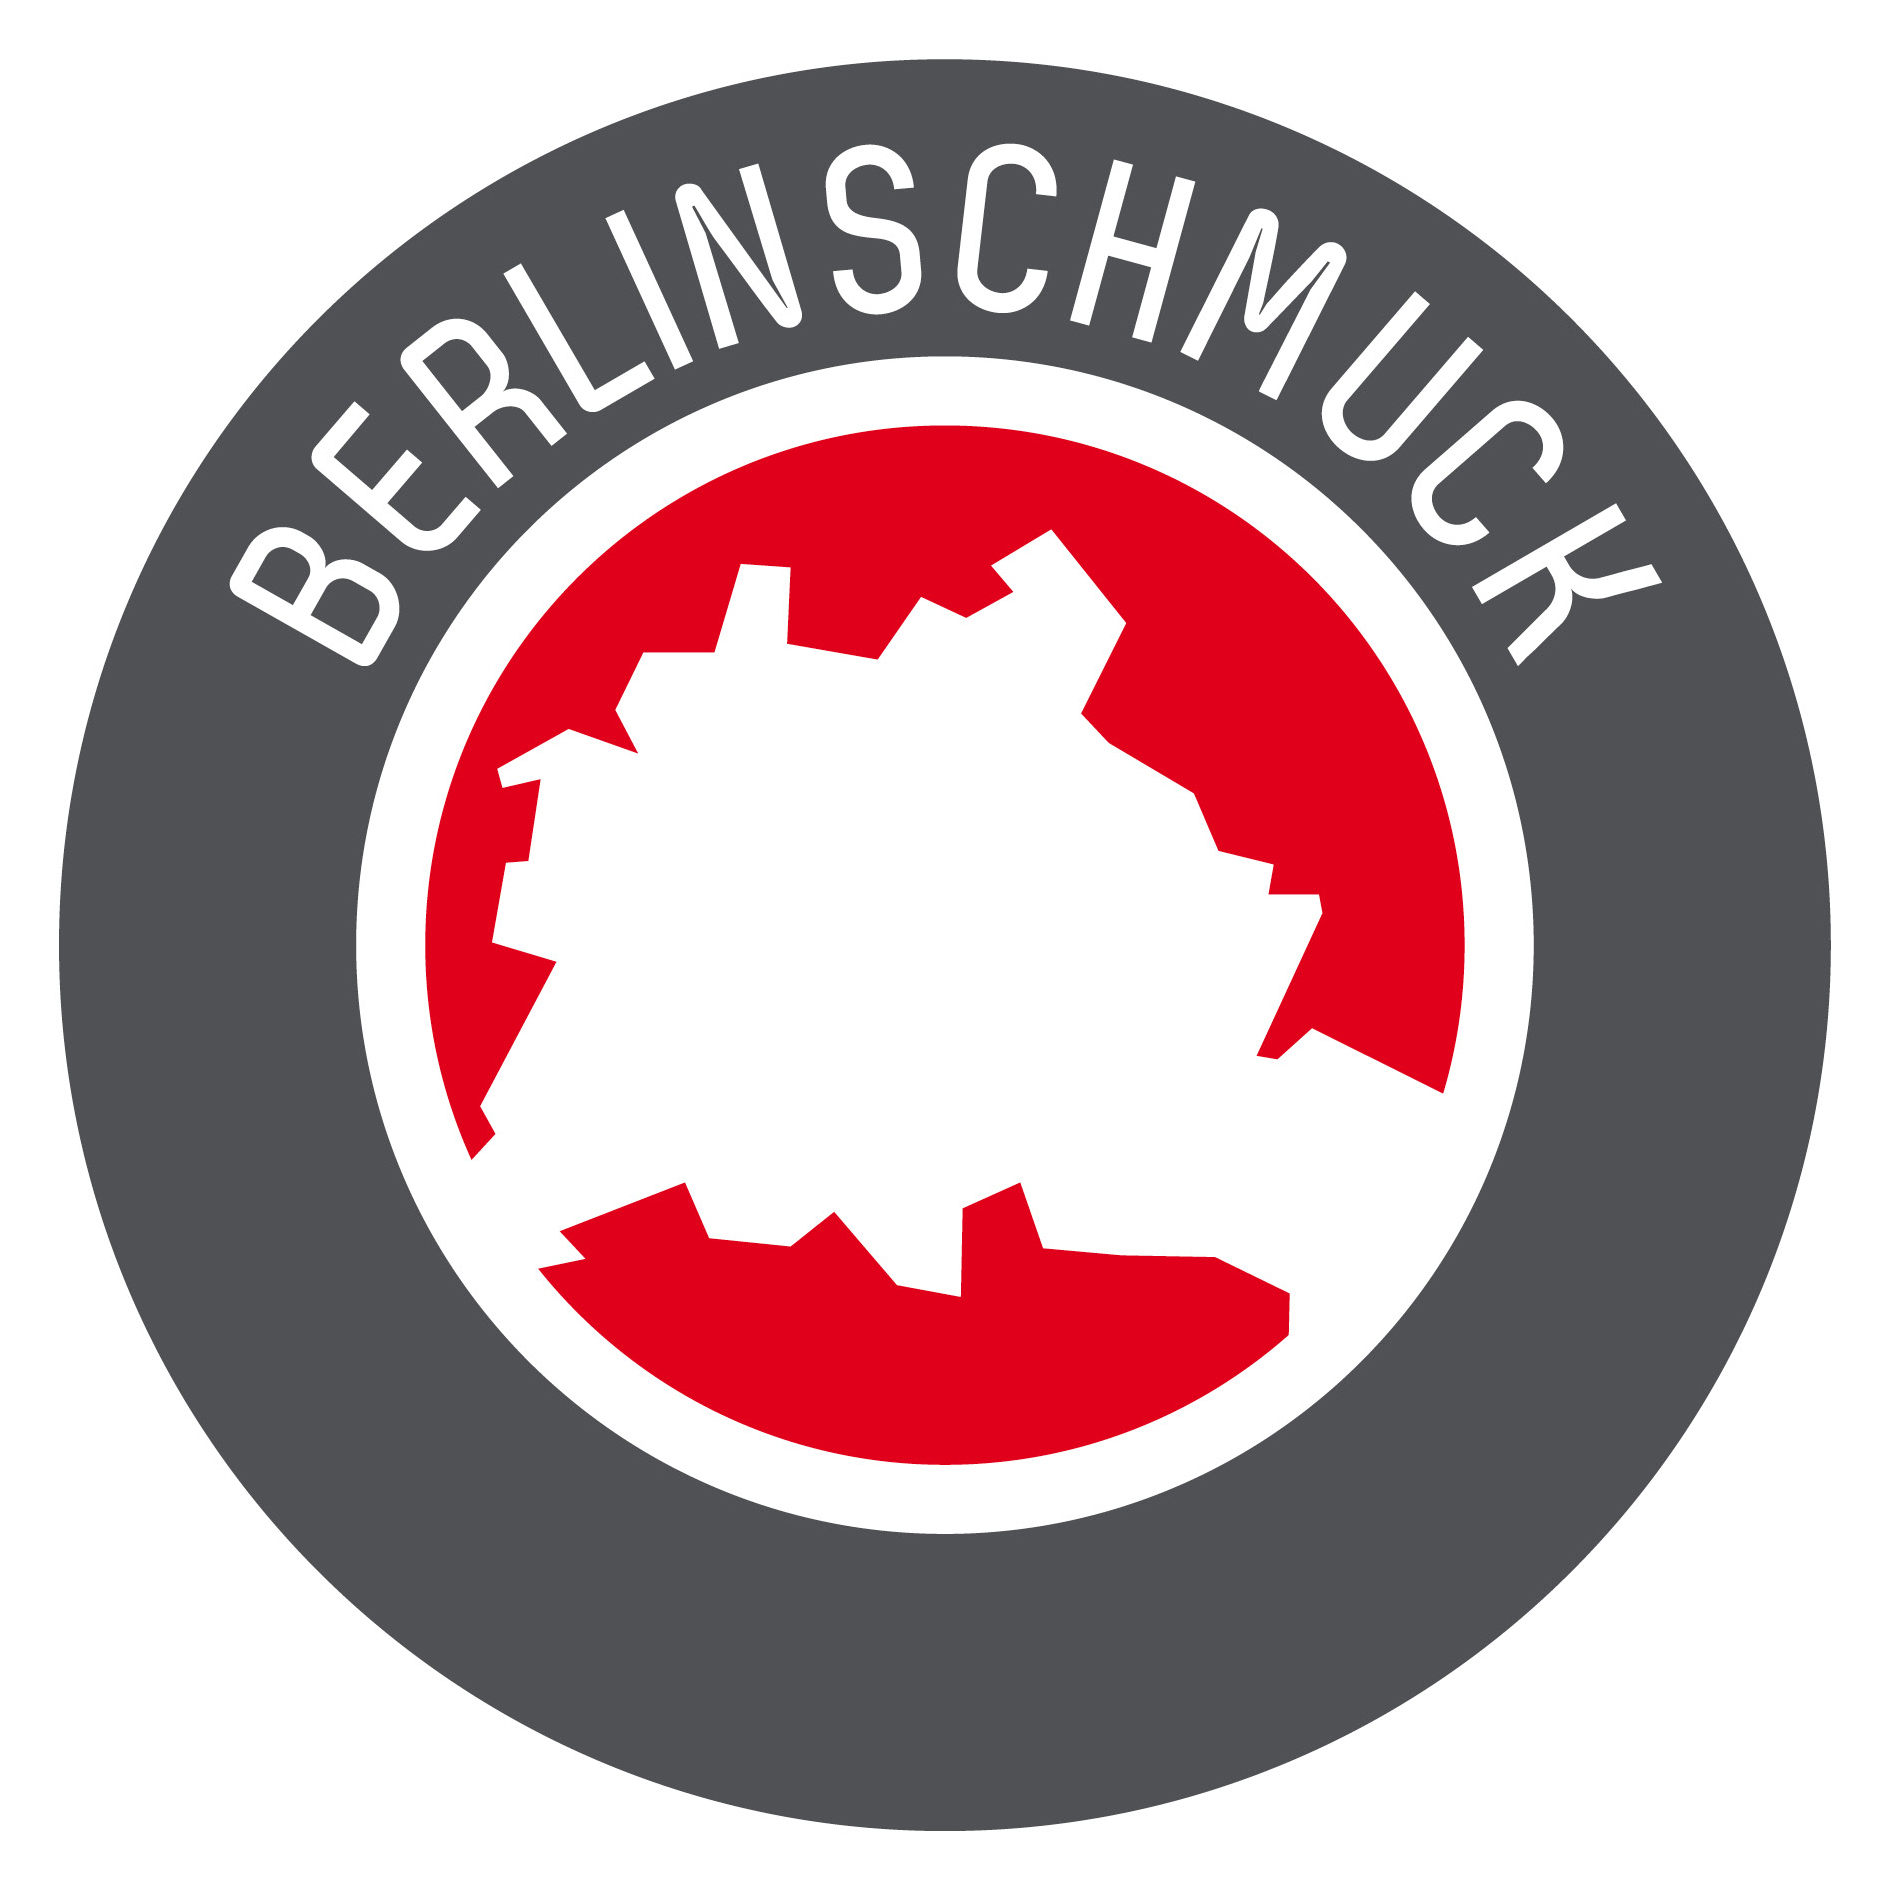 Berlin Schmuck